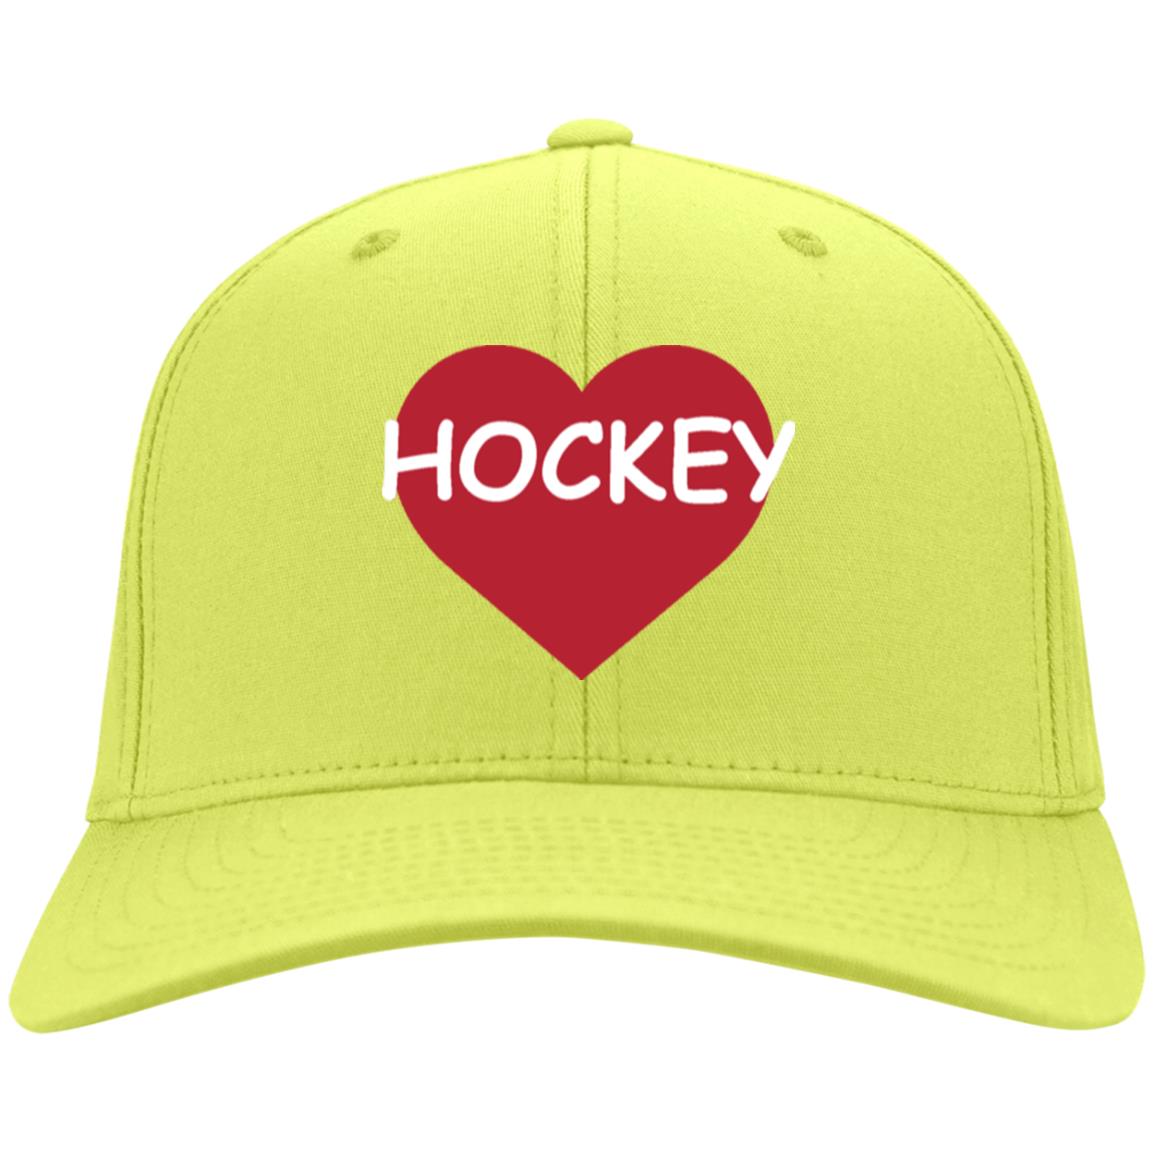 Hockeyv Sport Hat